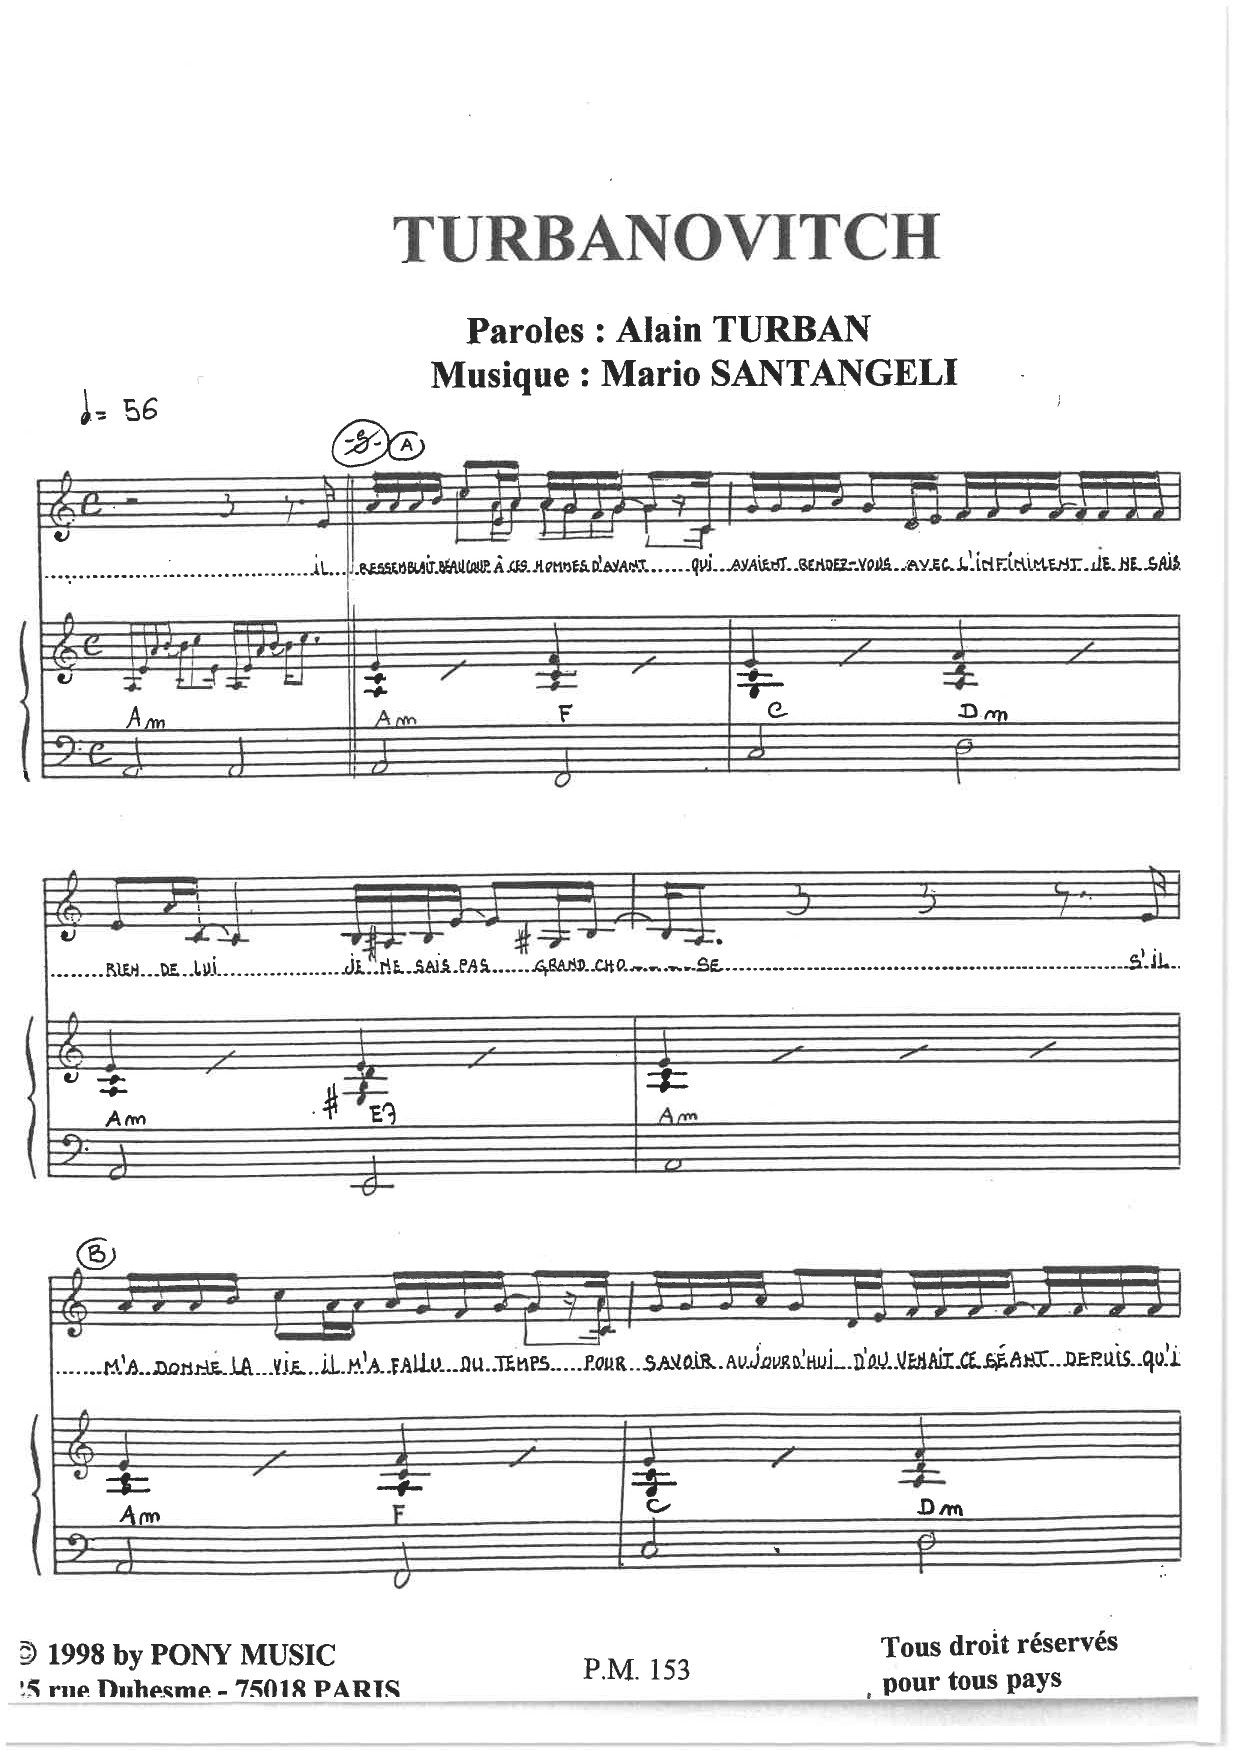 Alain Turban and Mario Santangeli Turbanovitch Sheet Music Notes & Chords for Piano & Vocal - Download or Print PDF